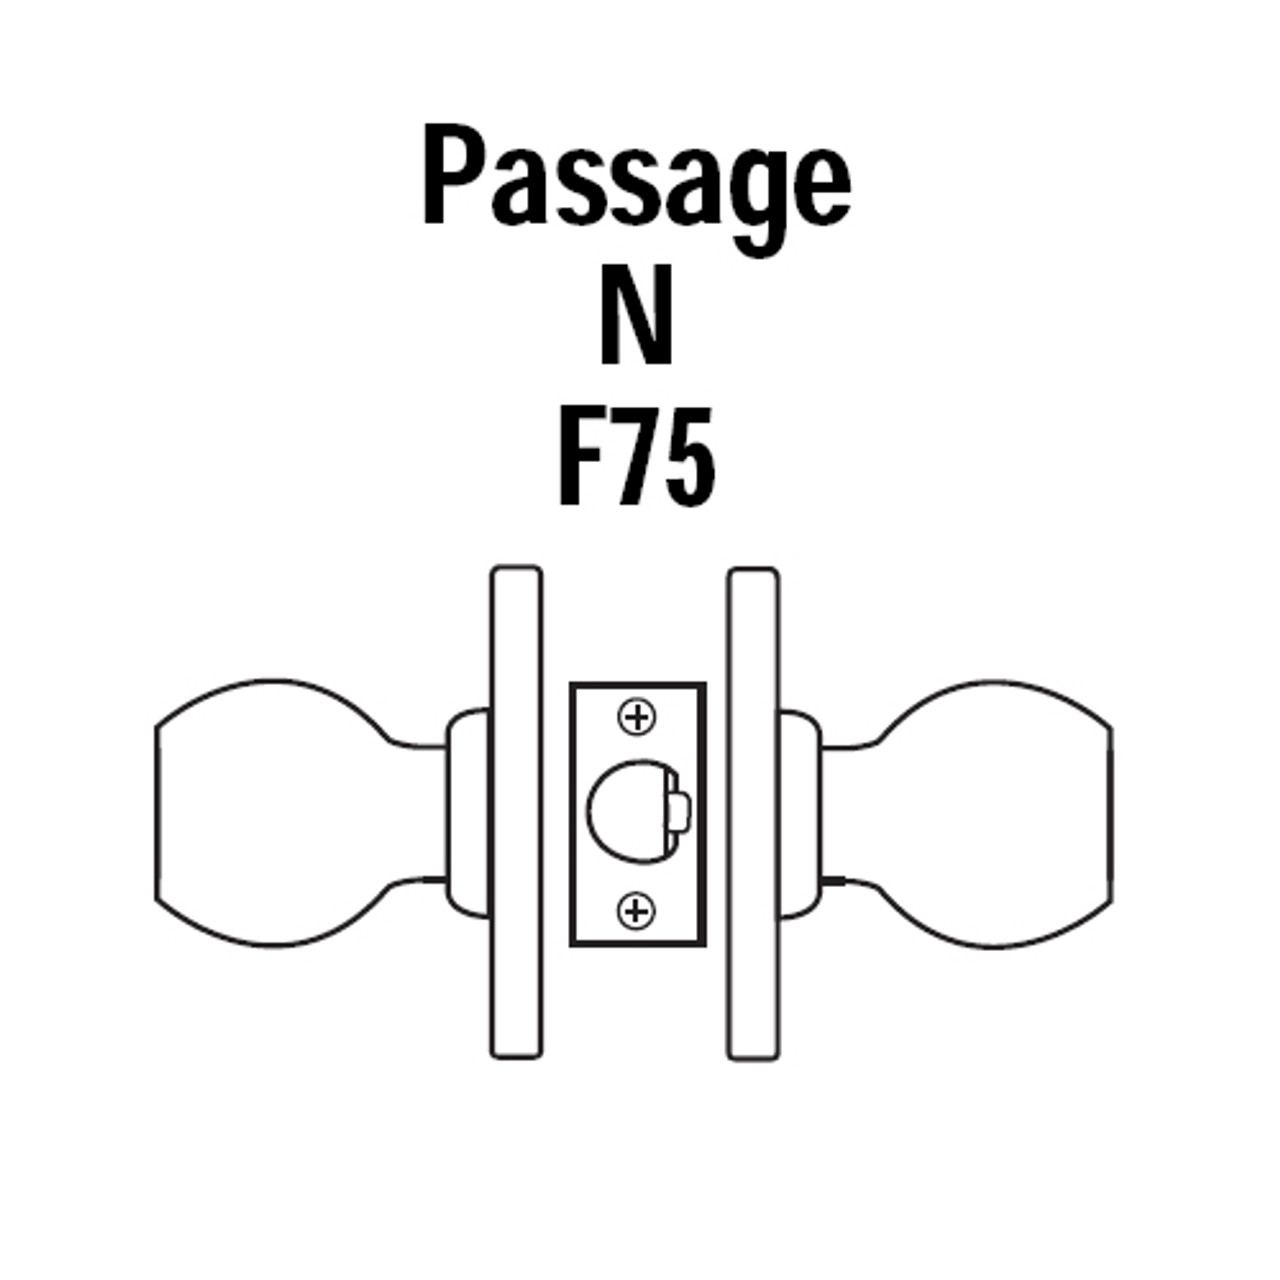 8K30N6DSTK612 Best 8K Series Passage Heavy Duty Cylindrical Knob Locks with Tulip Style in Satin Bronze